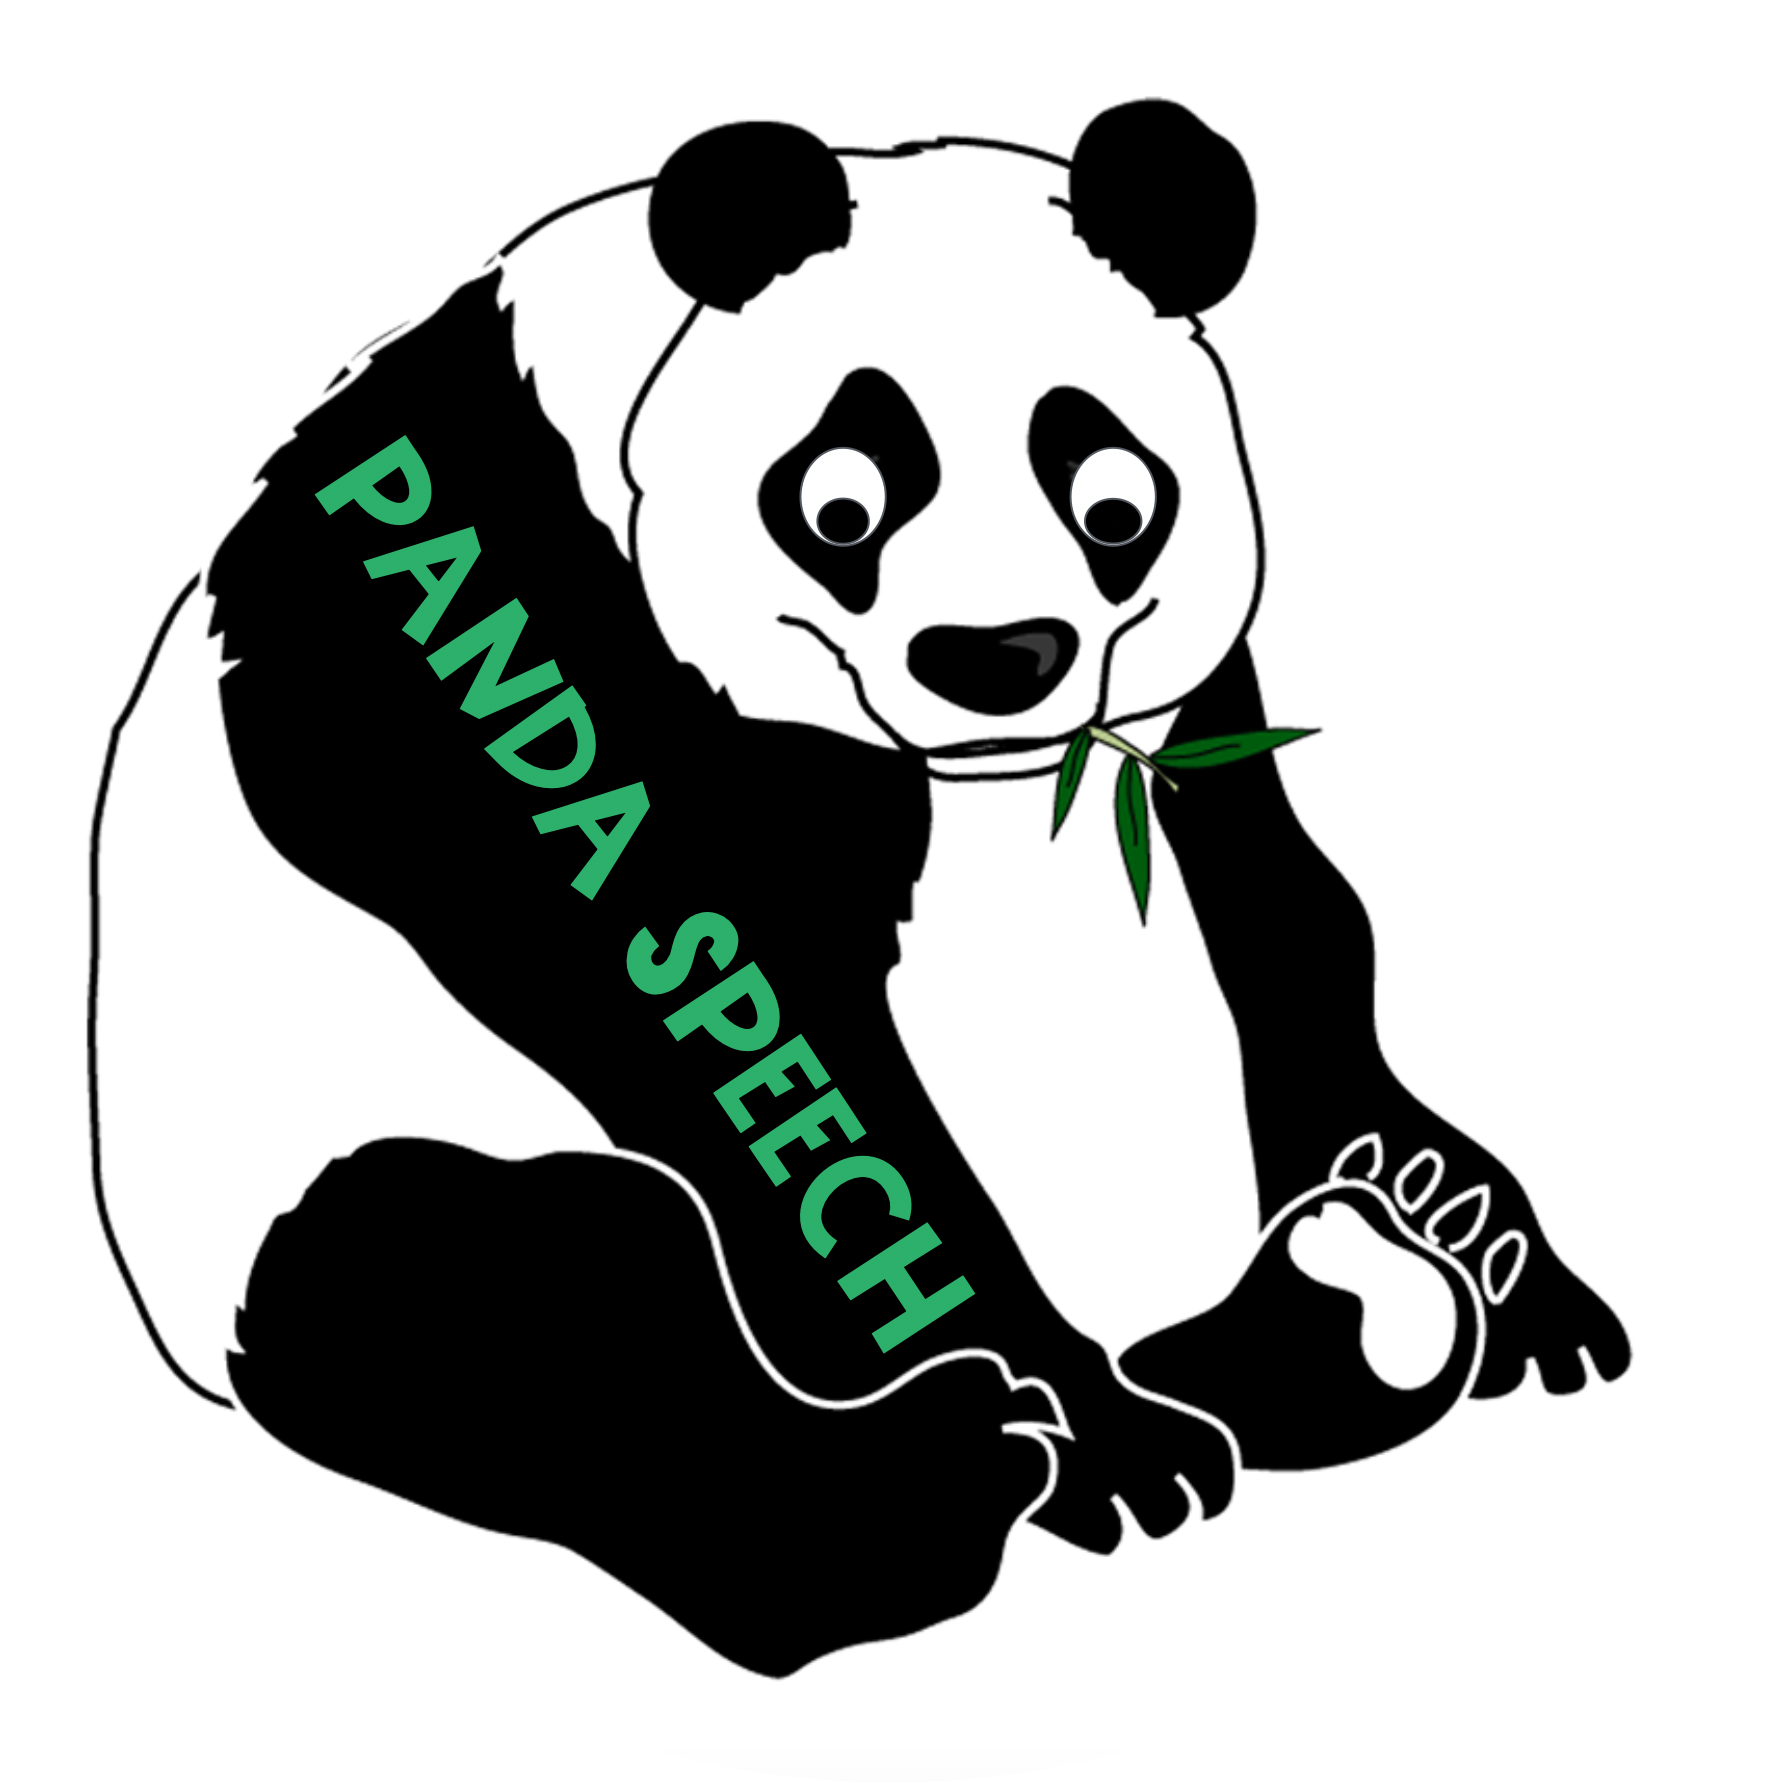 Pancake Dash: A Category Game by Panda Speech